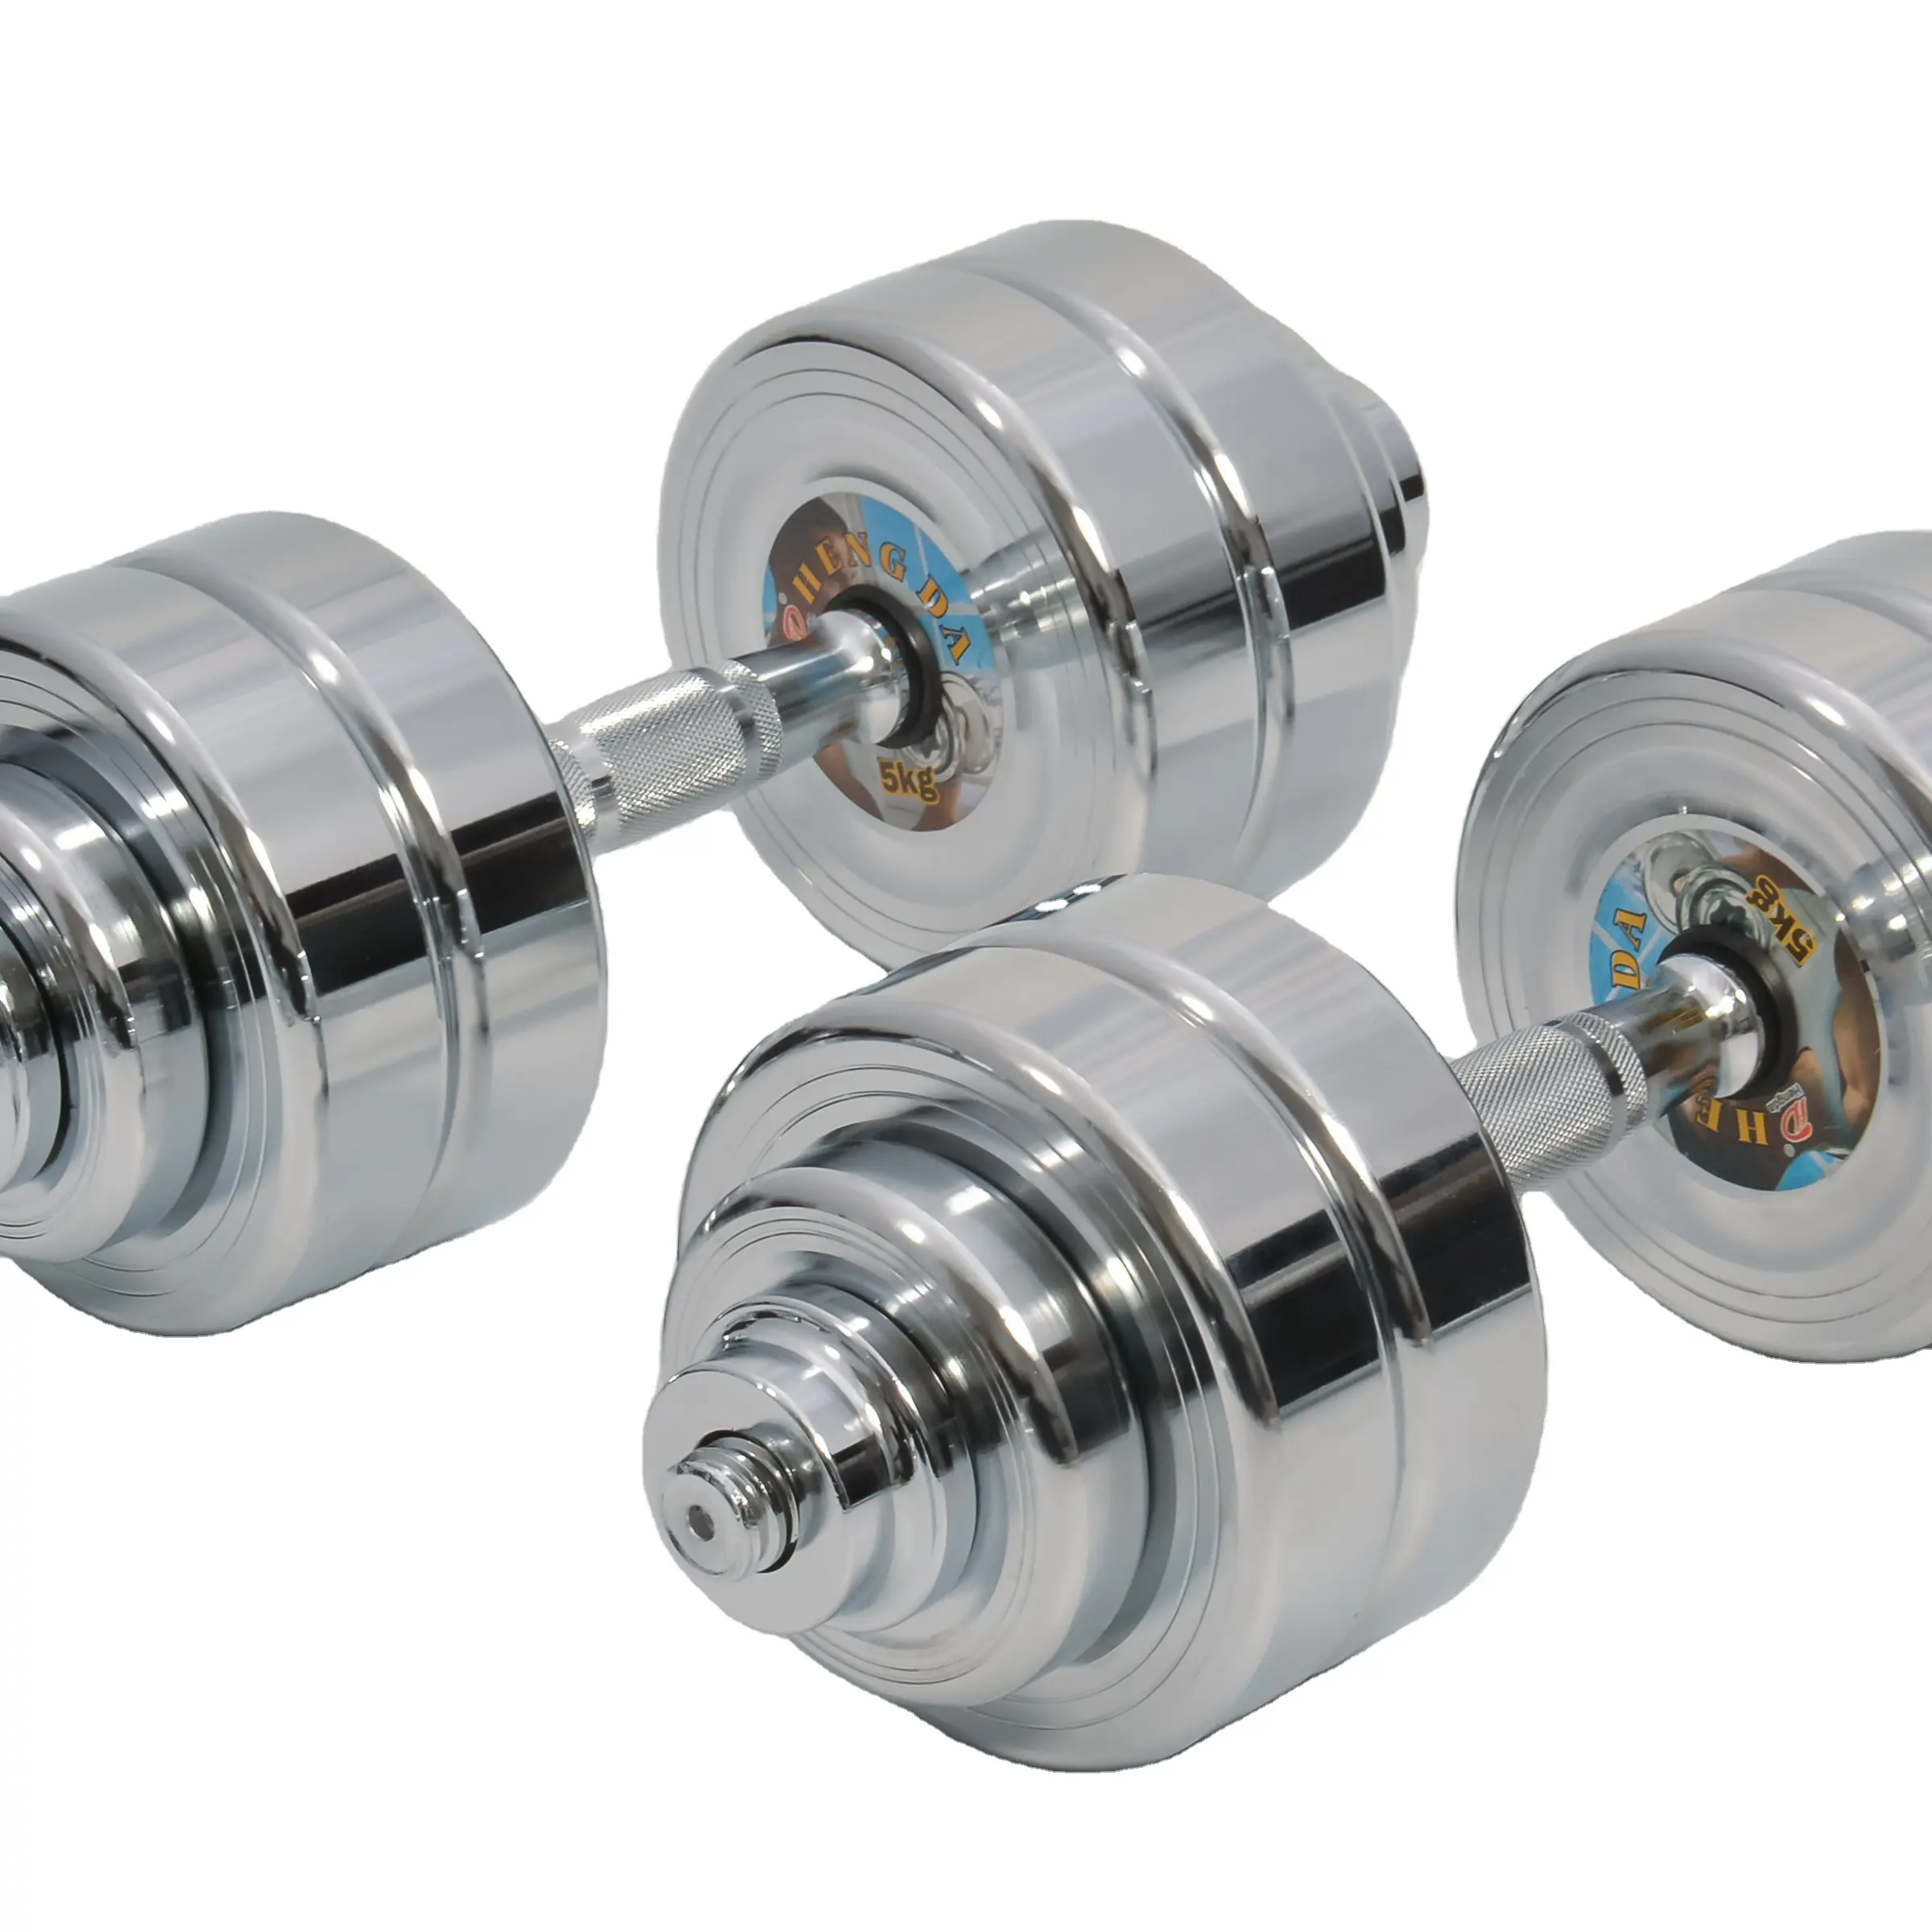 exquisite durable adjustable dumbbell set home bodybuilding exercise cast iron silver chrome barbell dumbbells 30 kg set